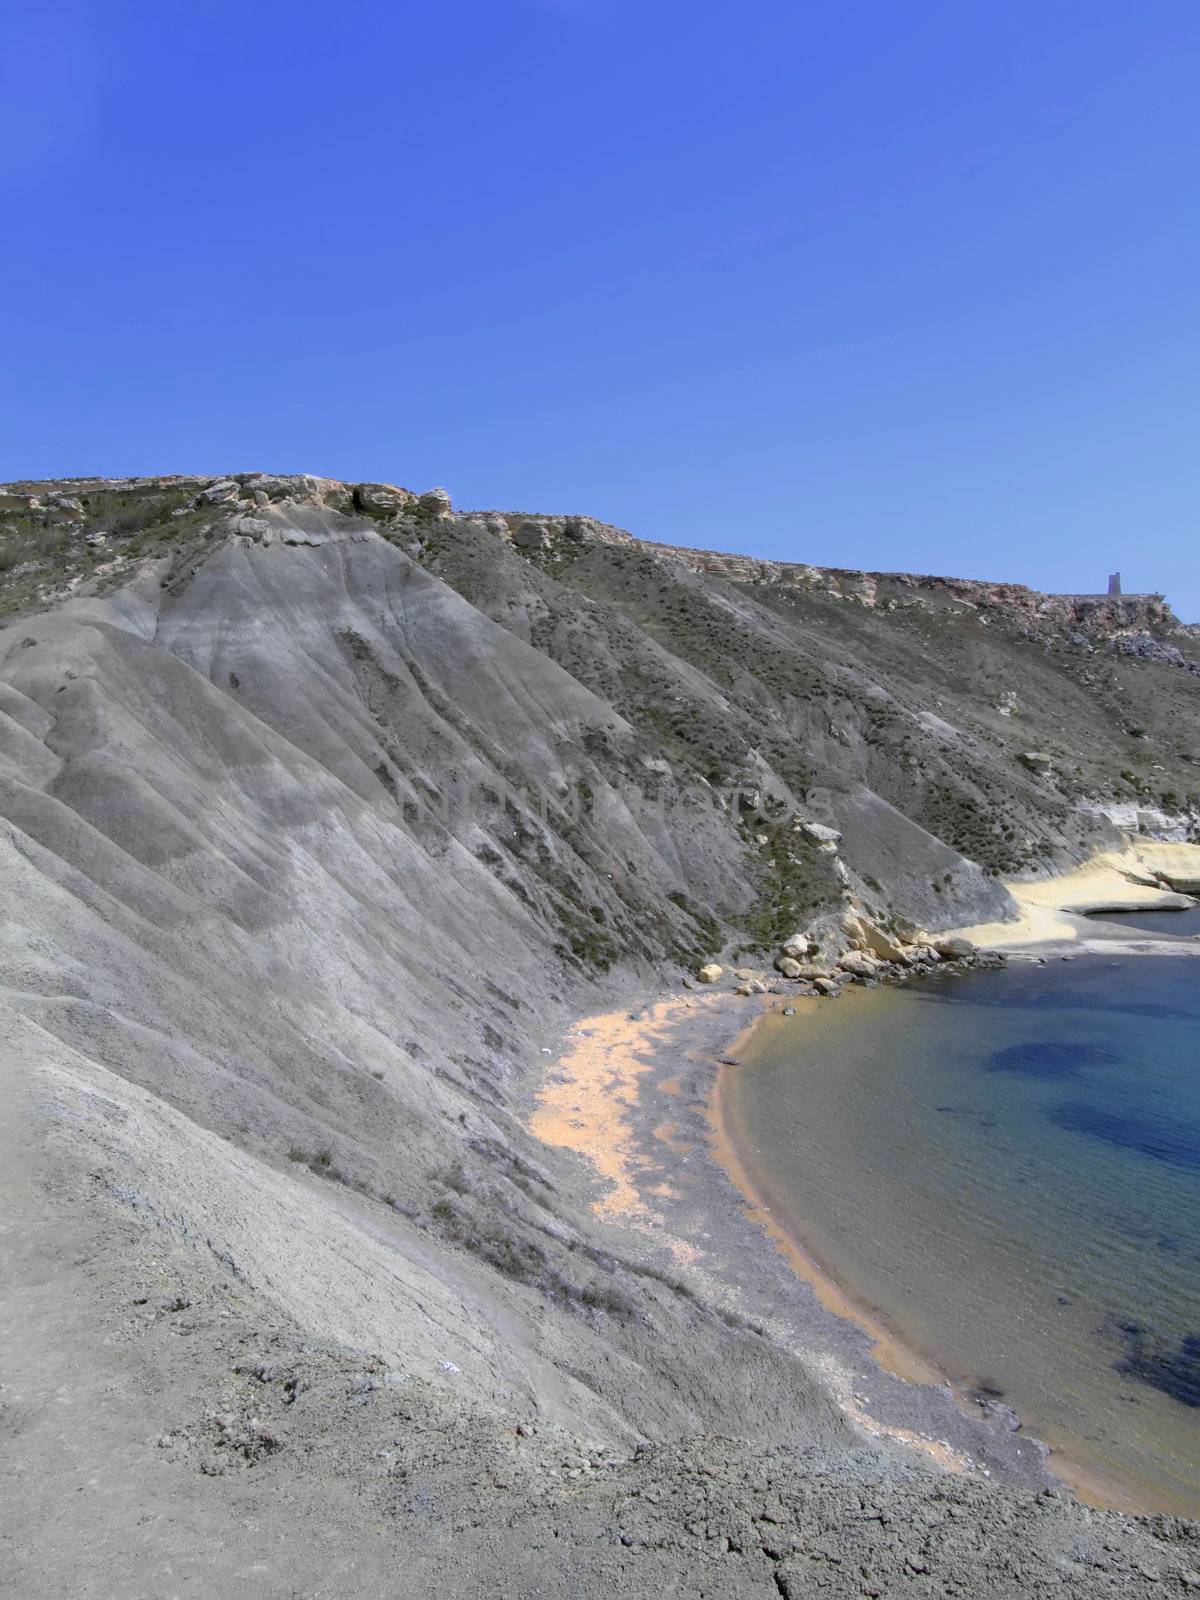 Unique clay dunes in the island of Malta, Mediterranean Sea